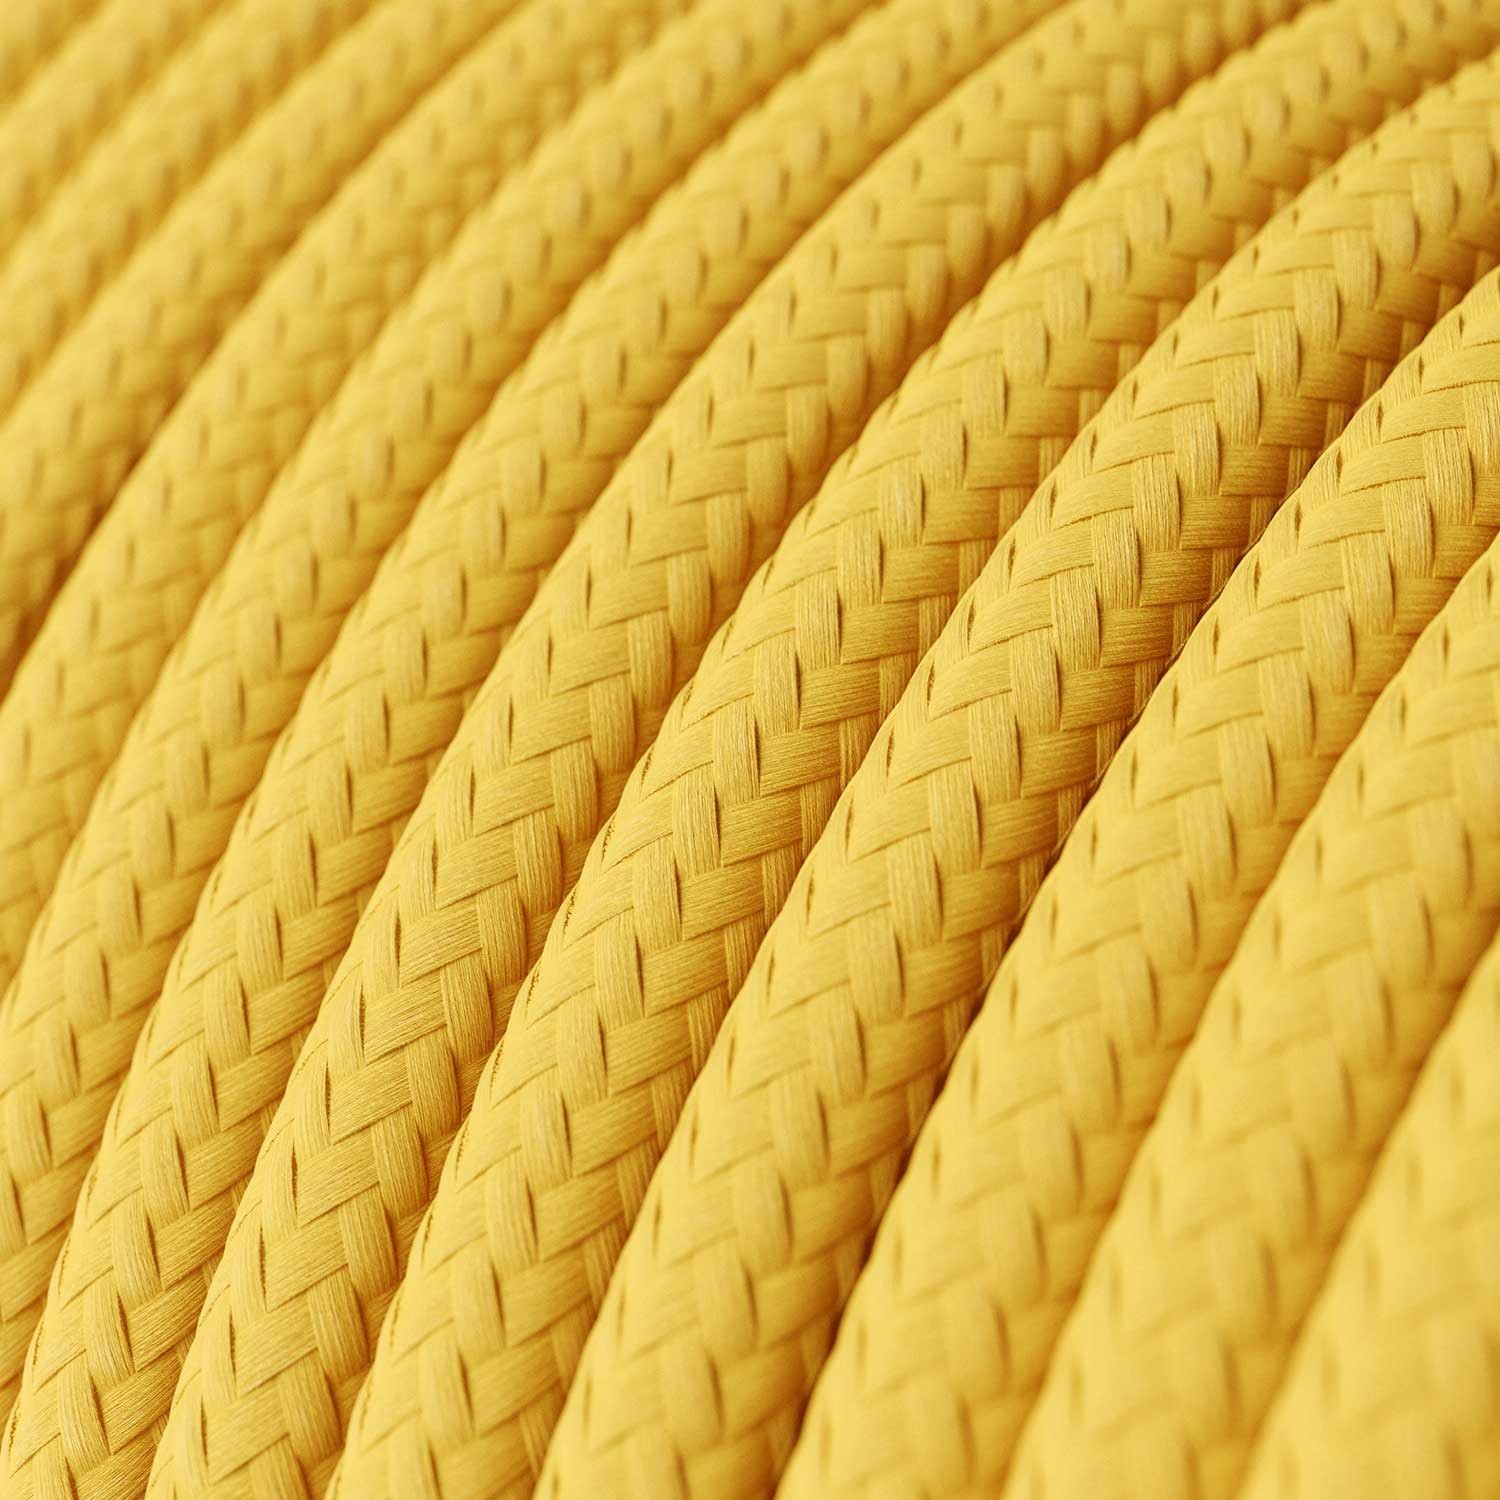 Okrugli tekstilni električni kabel RM10 - žuta